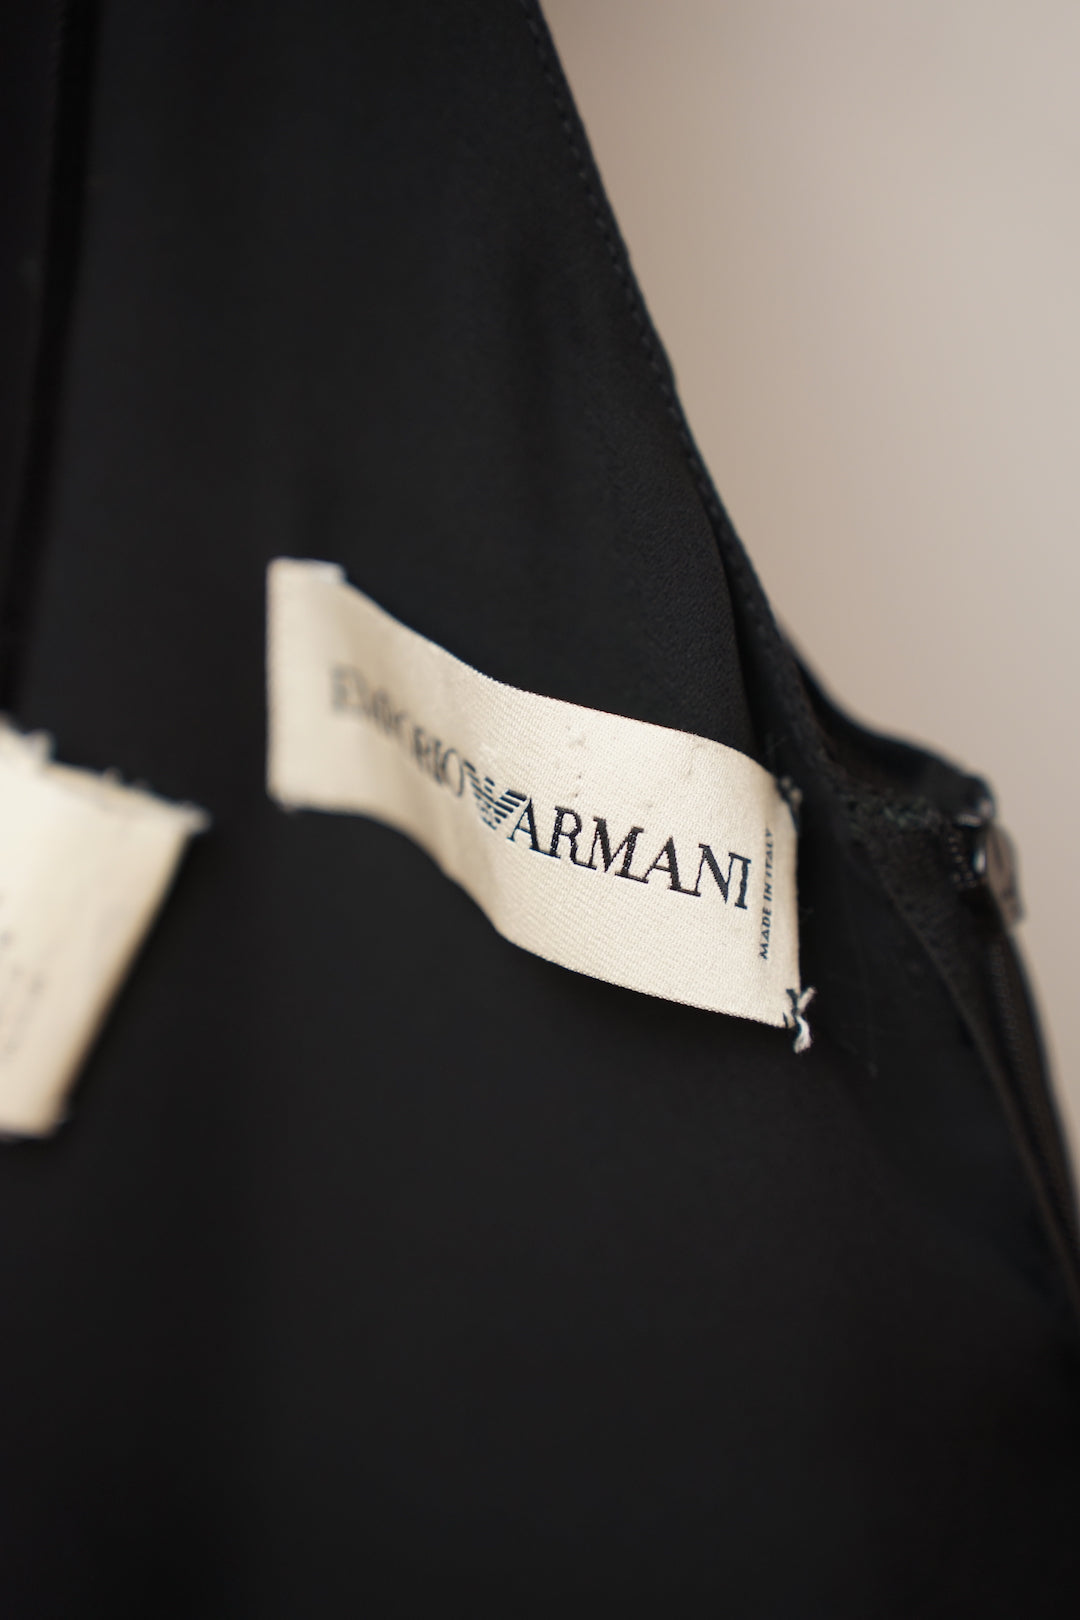 Emporio Armani silk dress